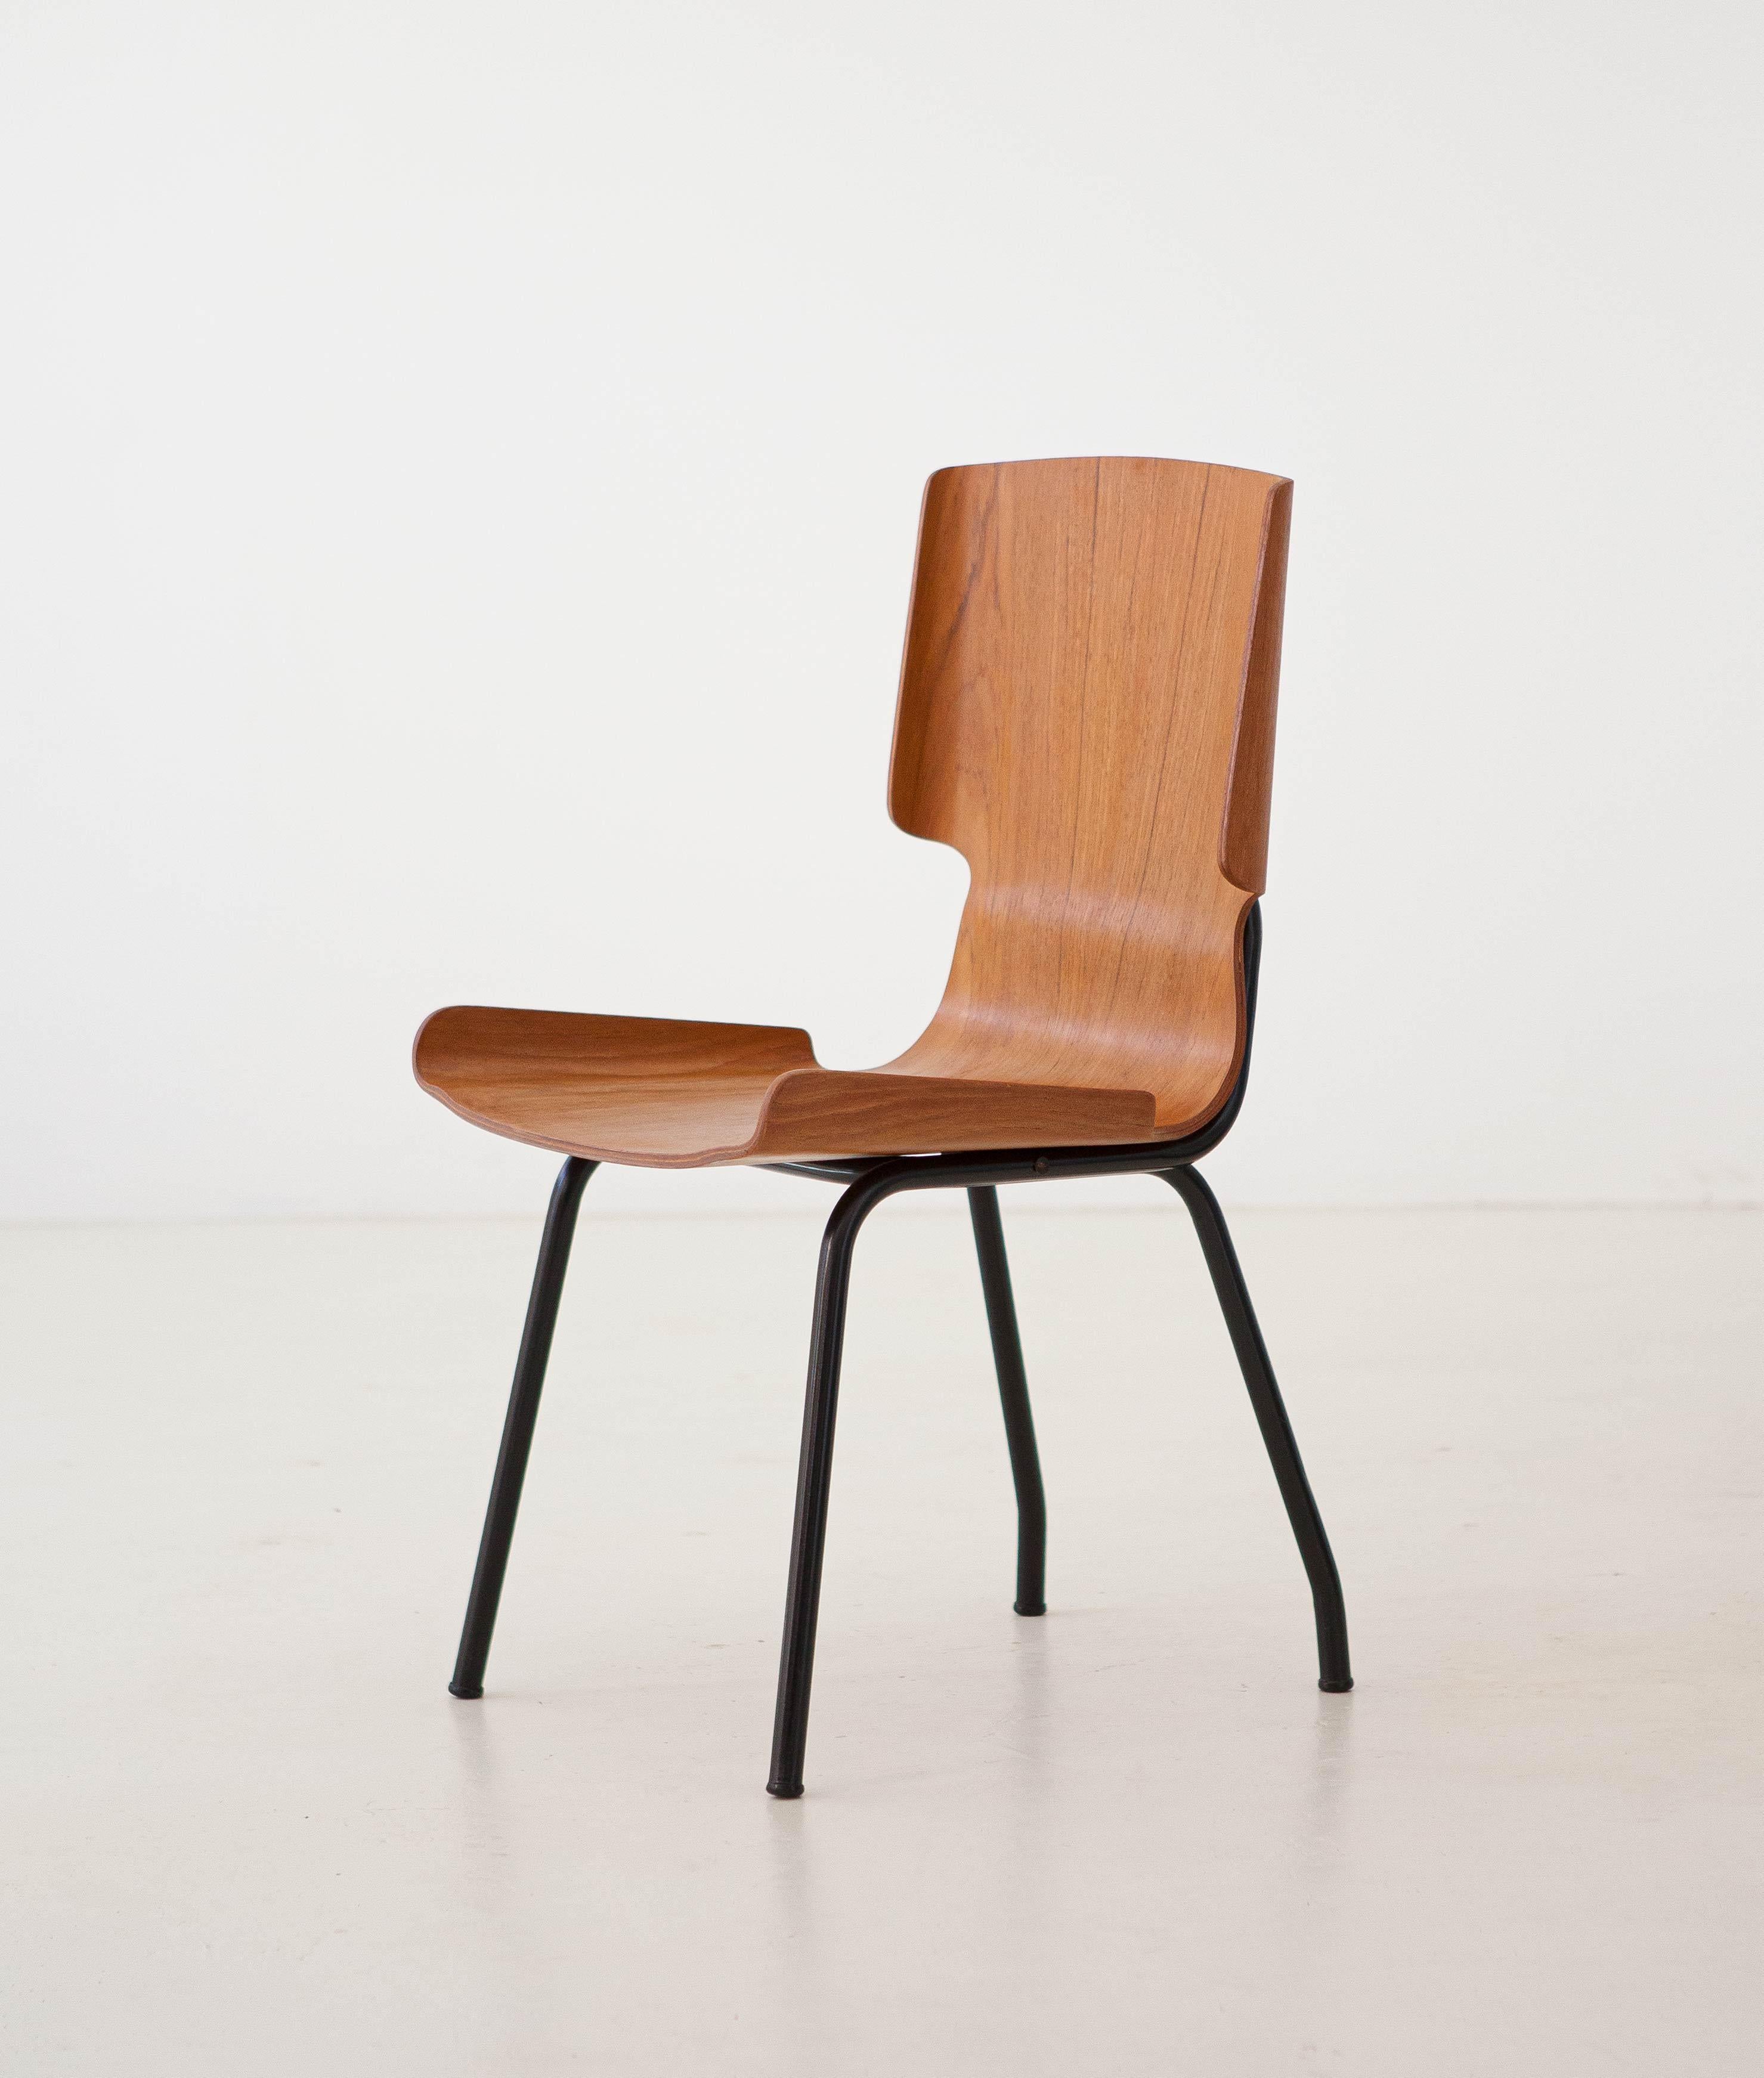 1950s Italian Curved Teak Chairs by SCC Societa’ Compensati Curvi, Set of Six For Sale 5